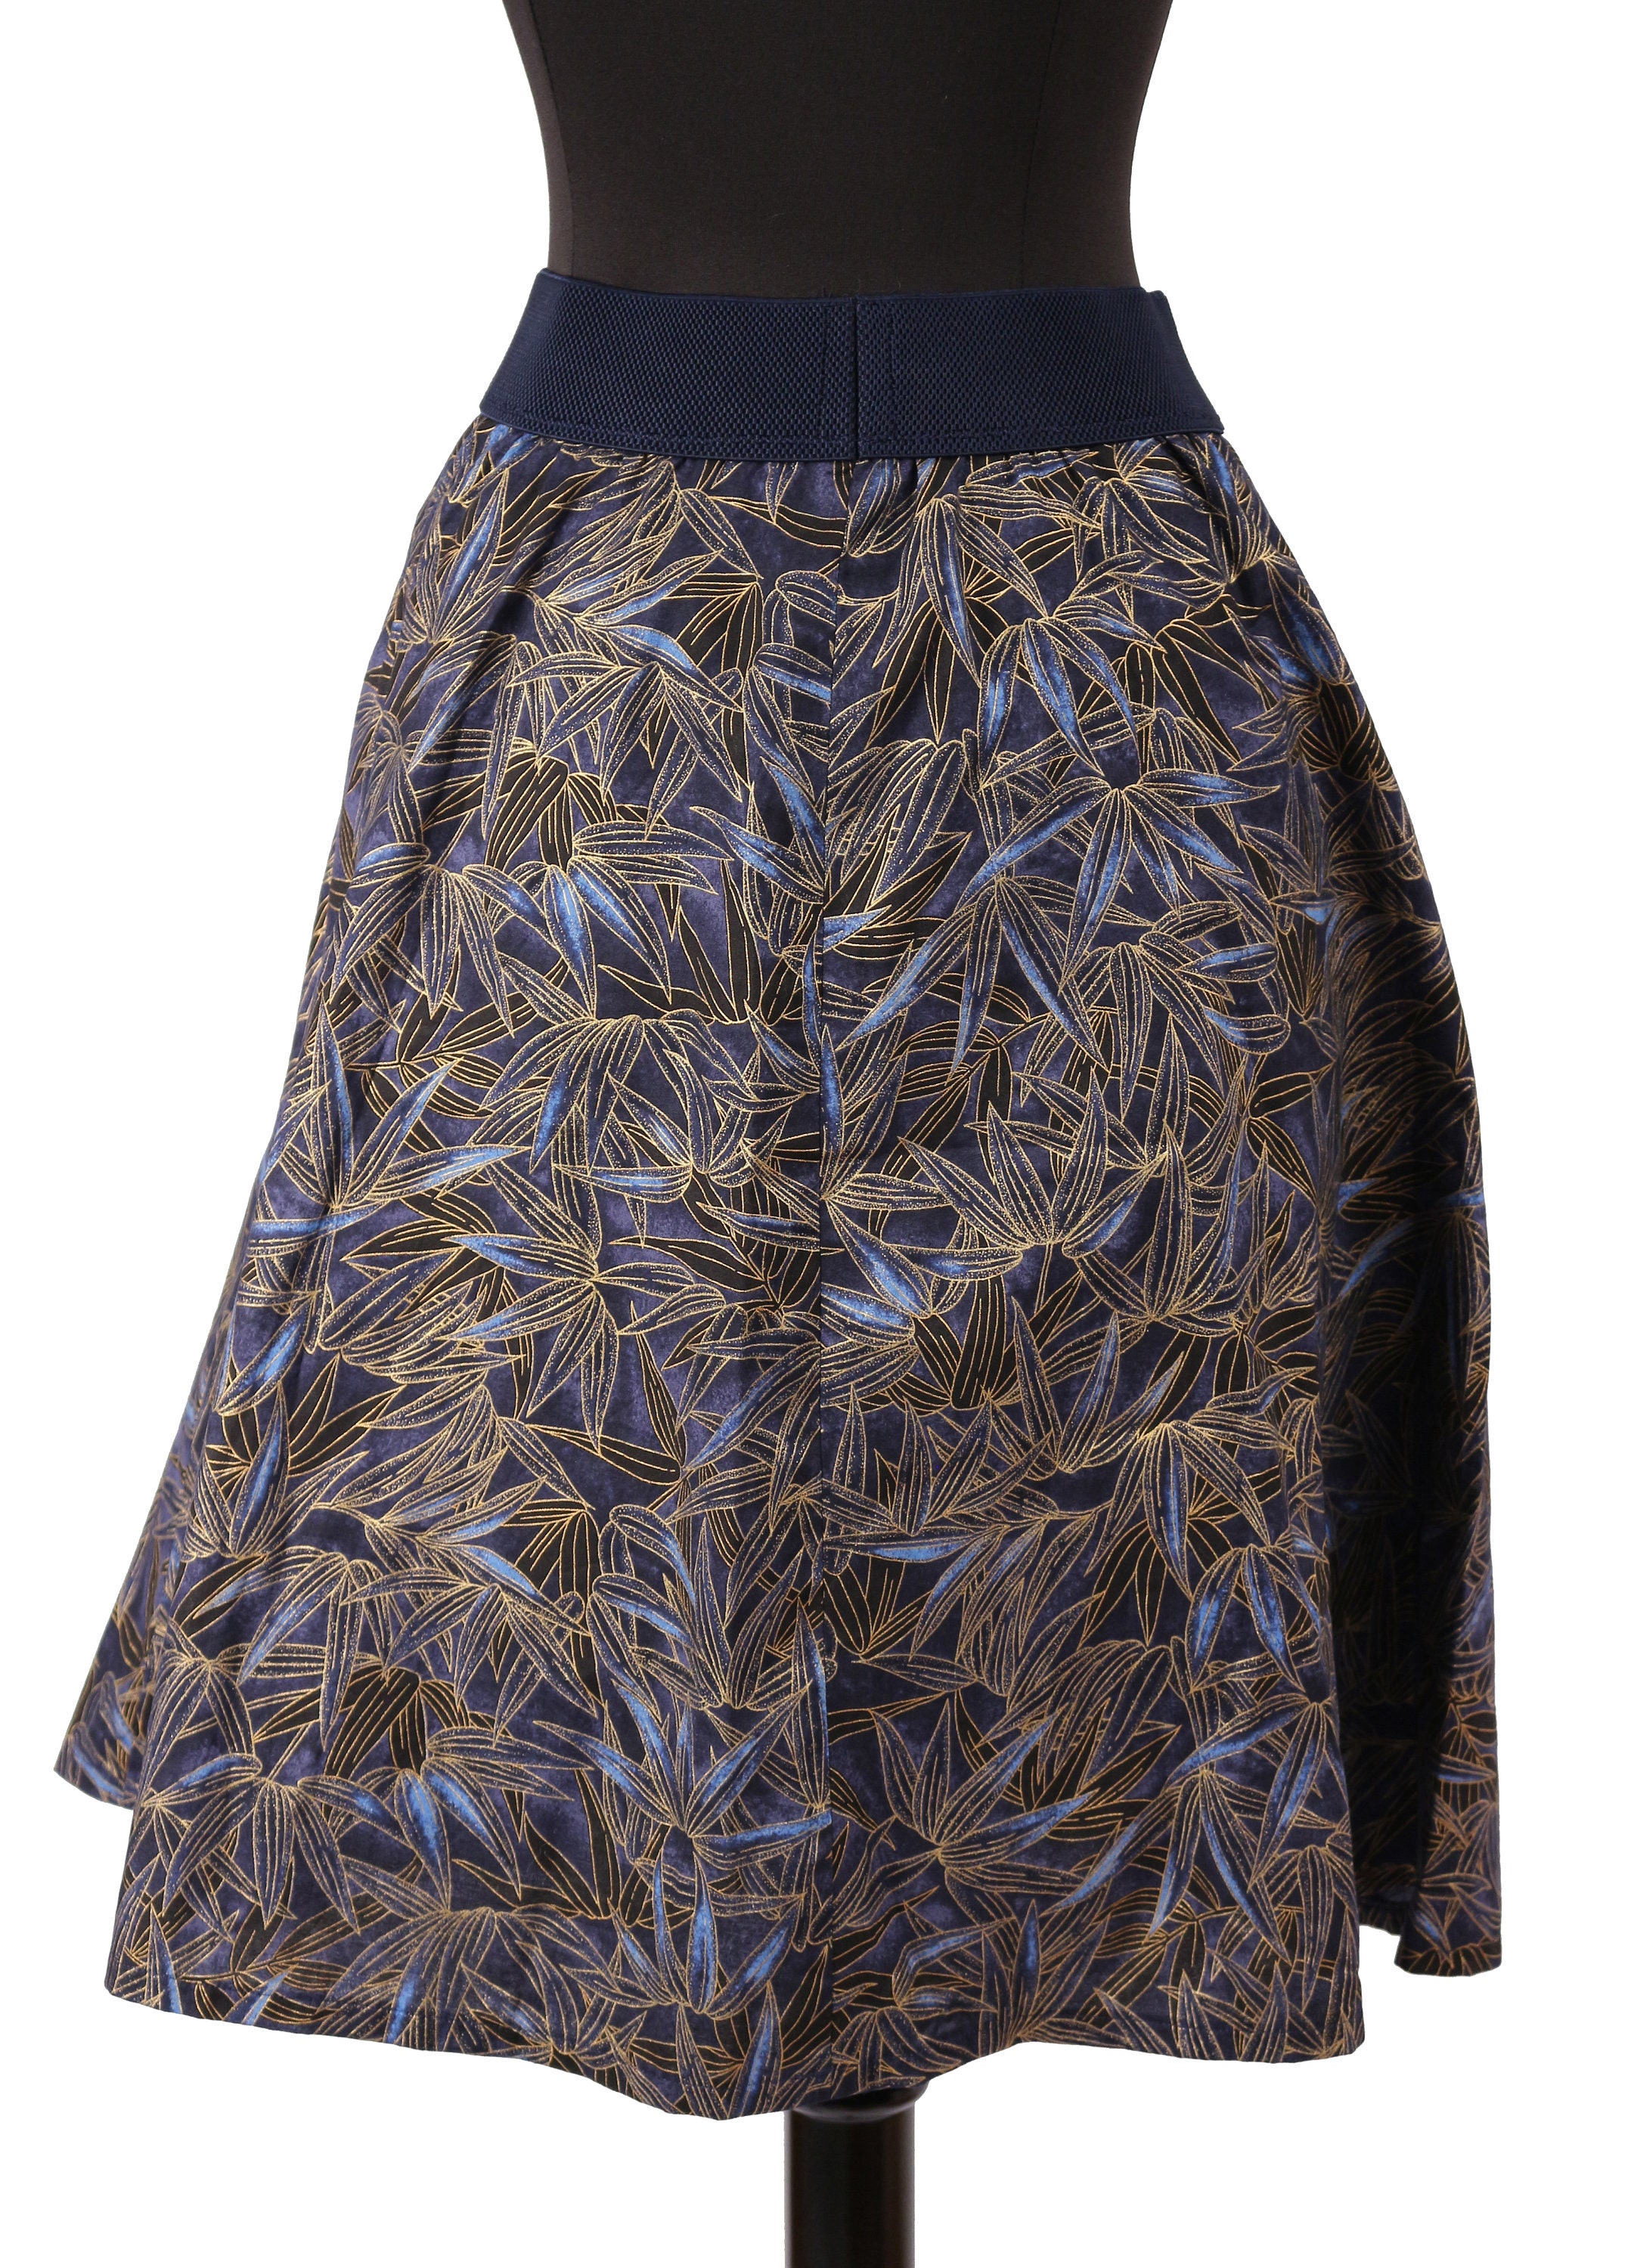 Bamboo Print Cotton Skirt Chinoiserie Theme Blue & Metallic - Etsy